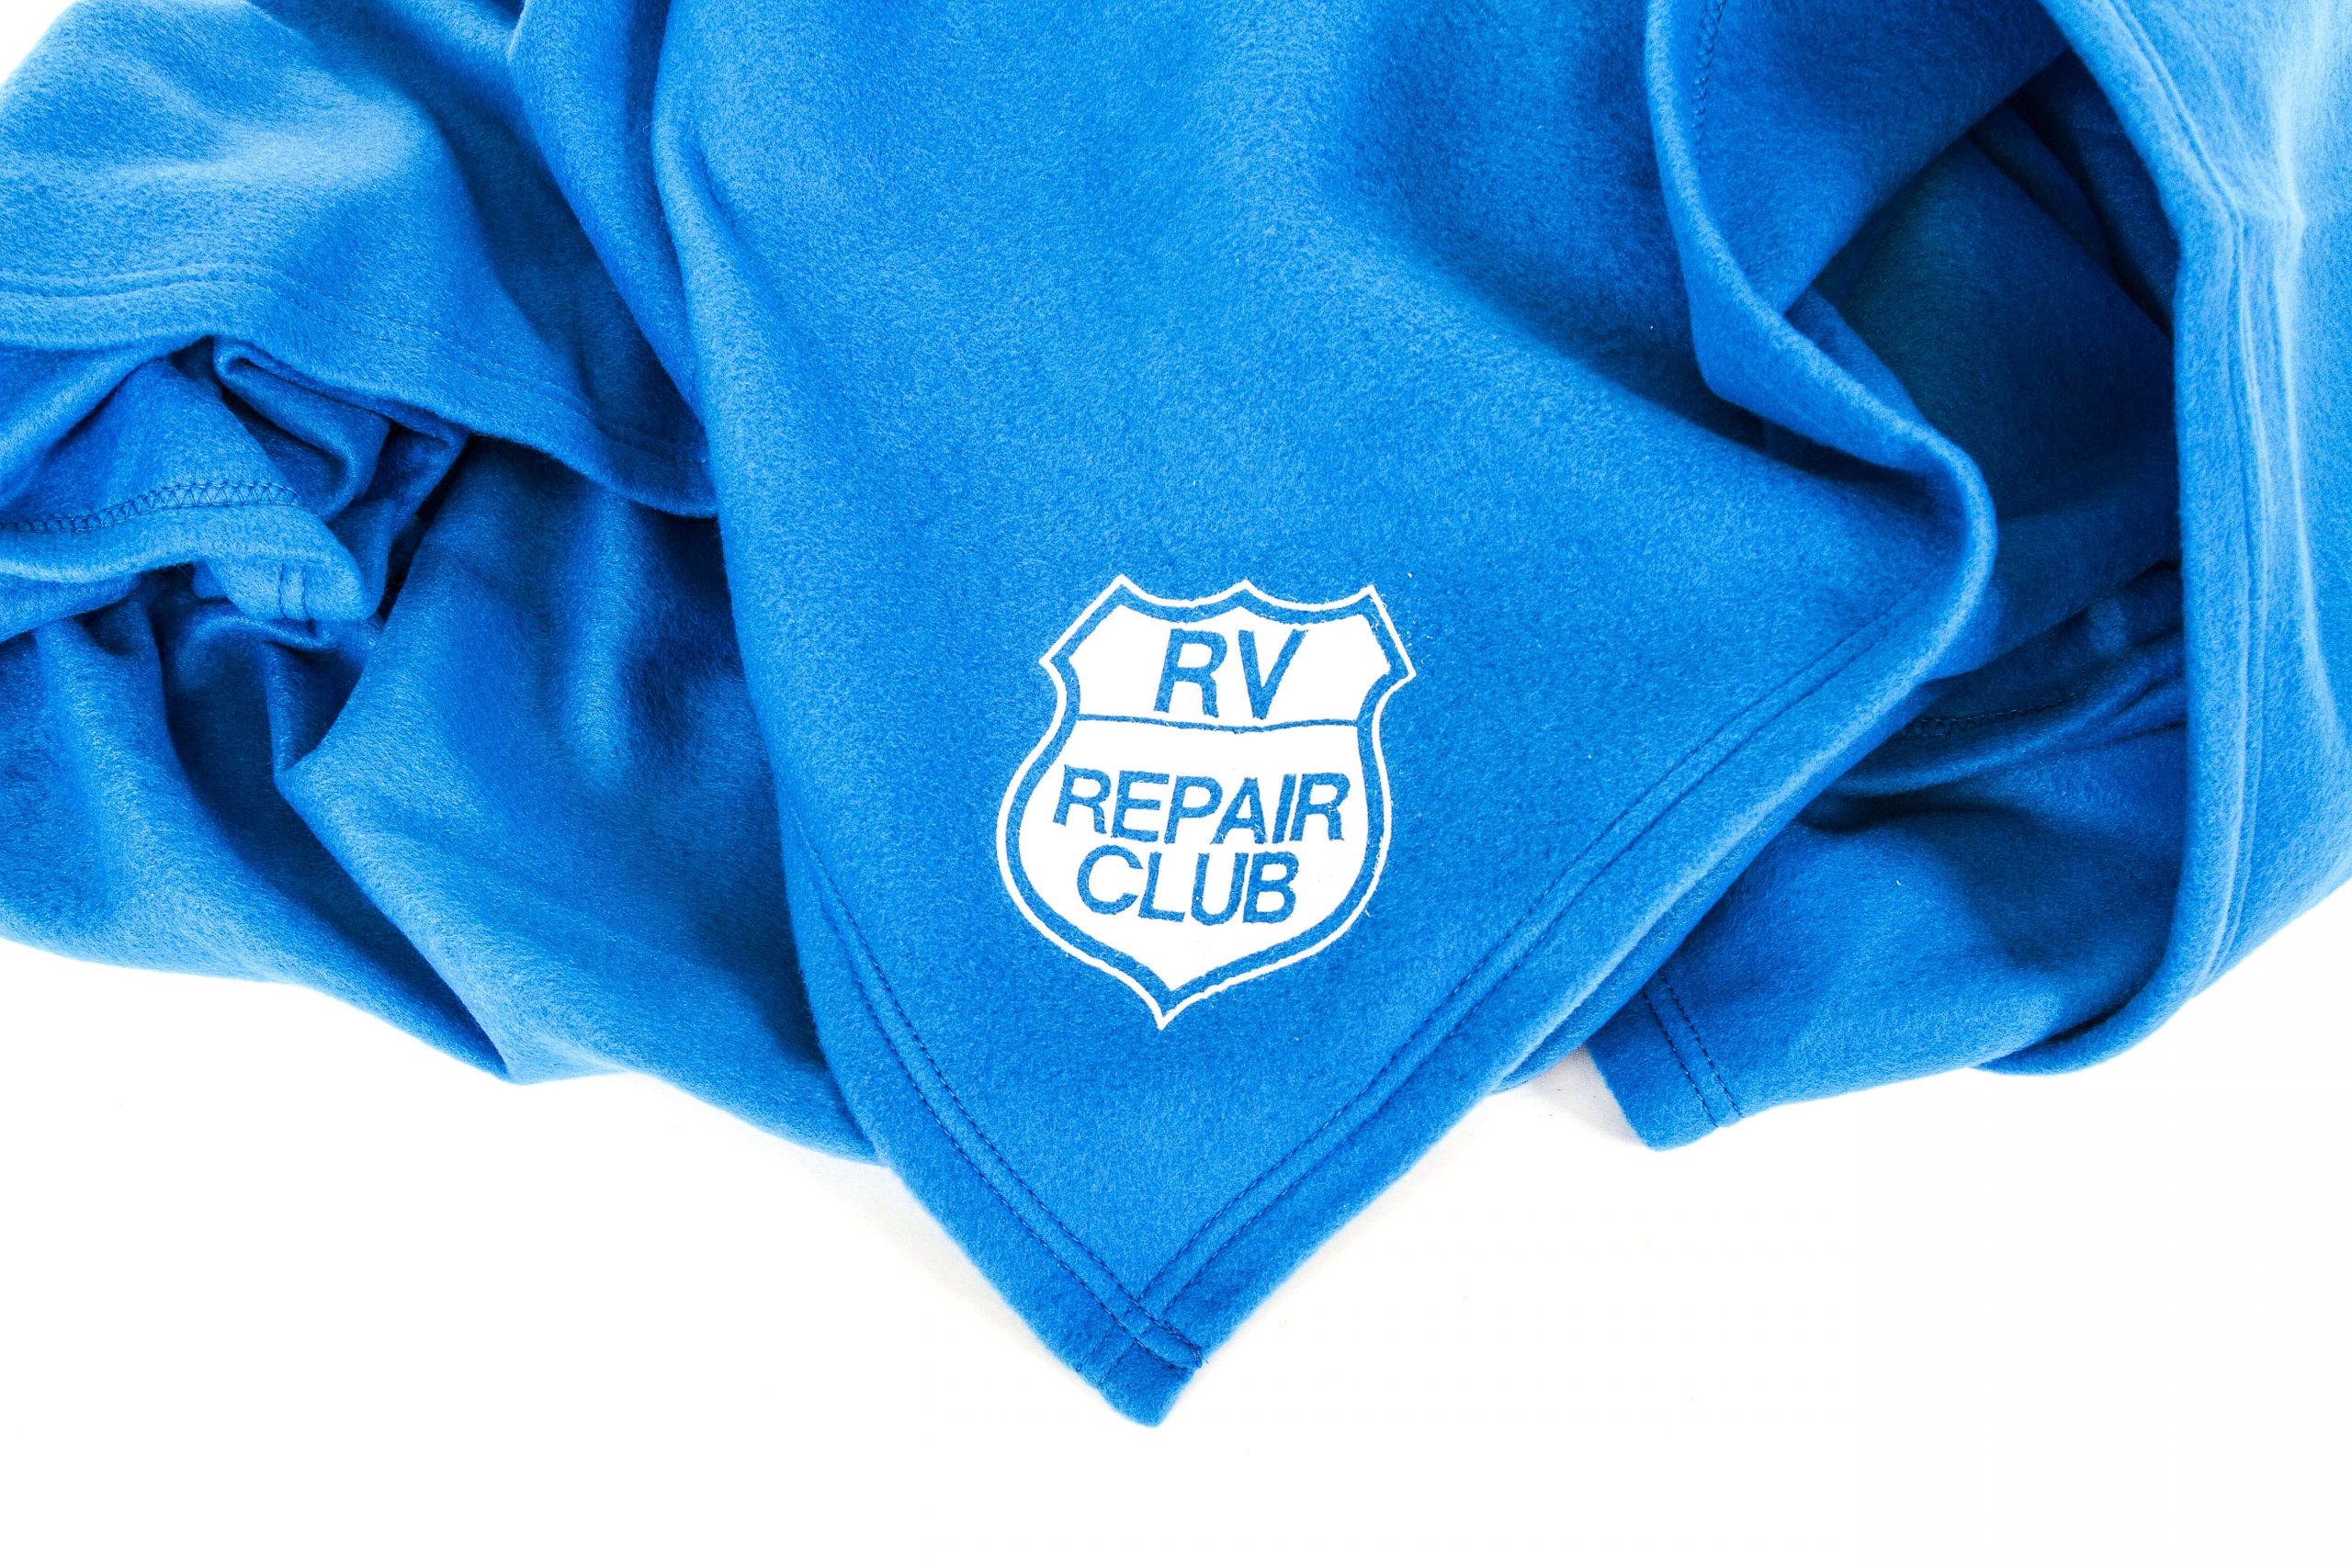 RV Repair Club Logo on a blue blanket